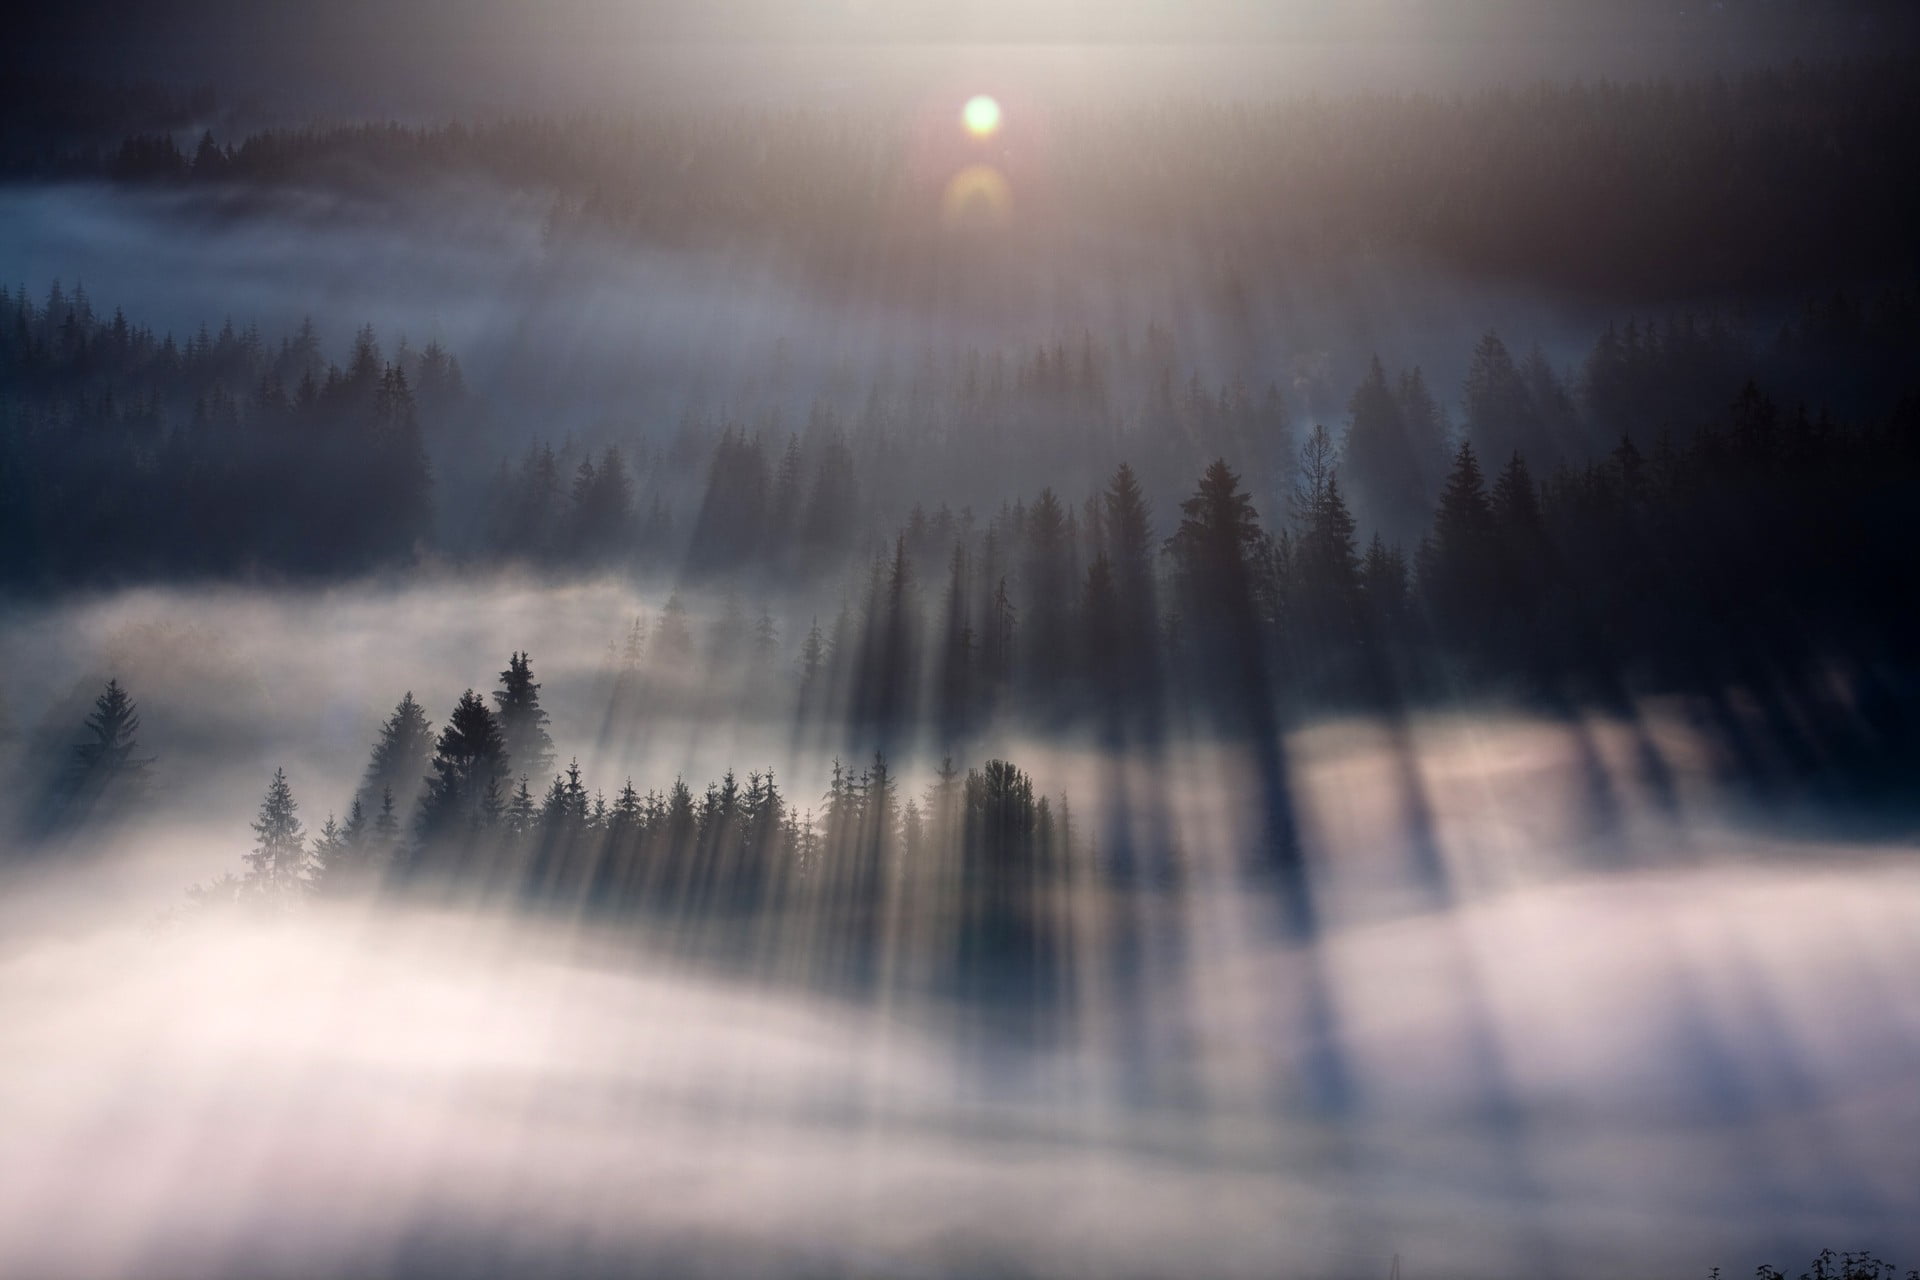 foggy forest, mist, nature, landscape, lens flare, sunlight, trees